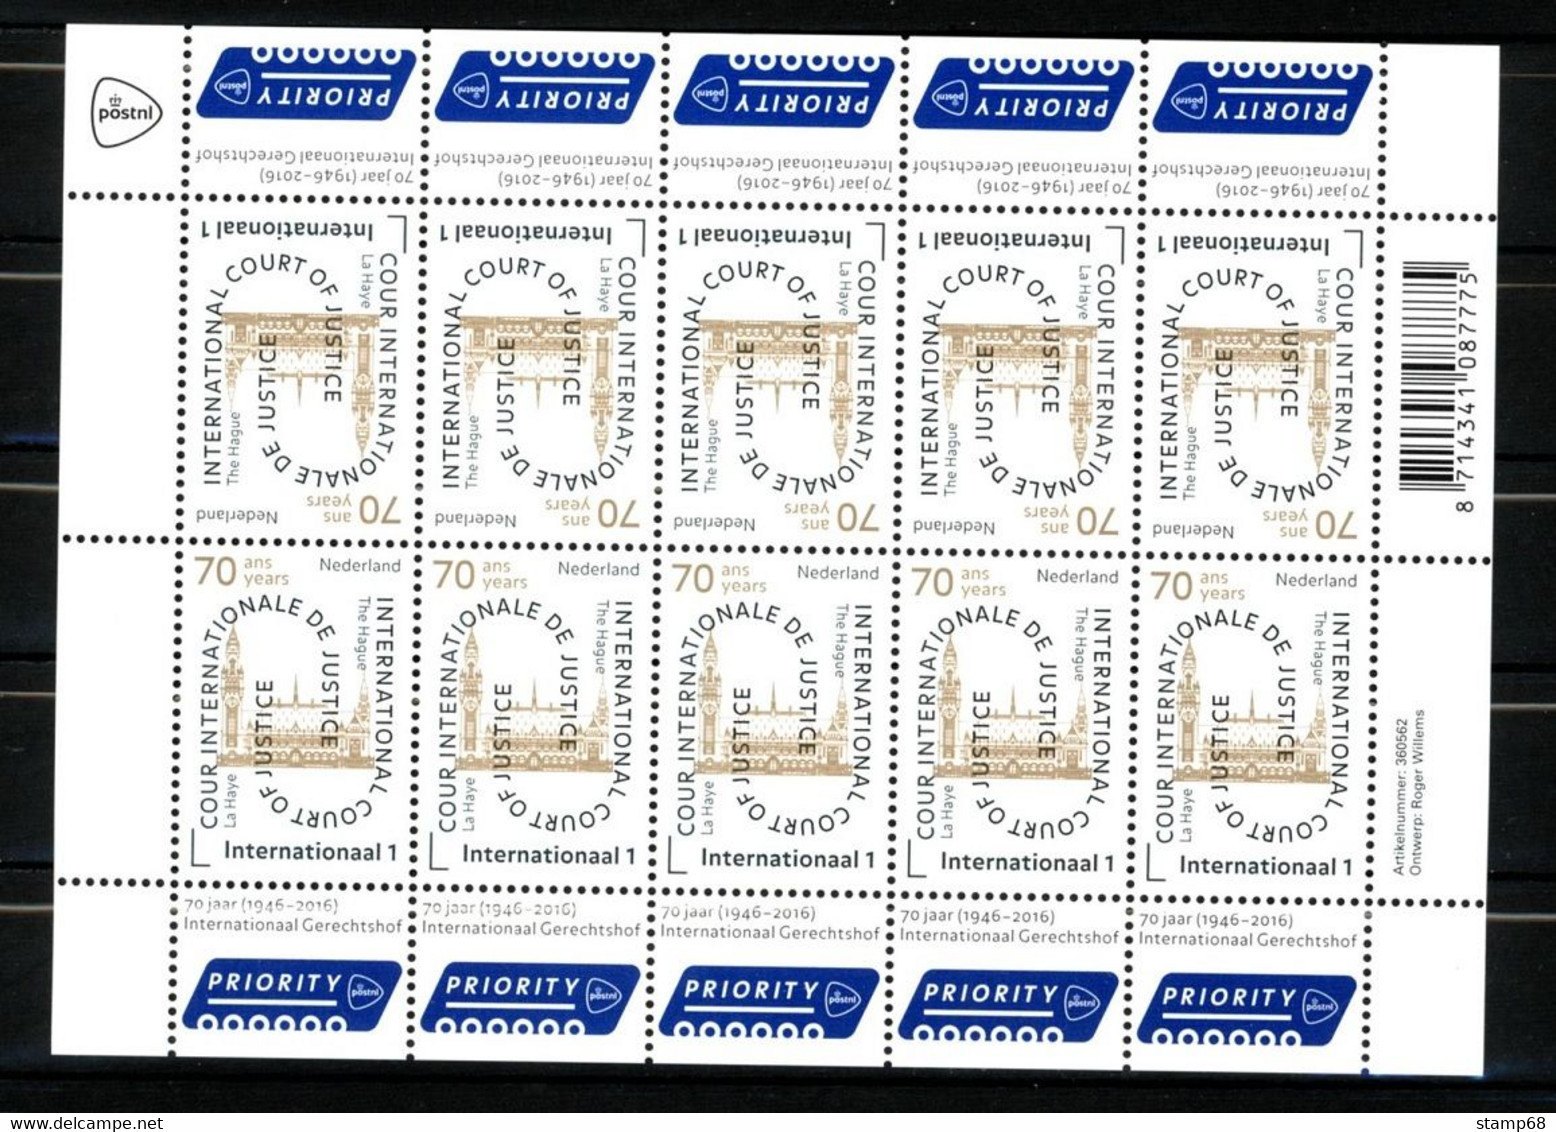 Nederland NVPH D64 VD64 Vel Cour De Justice 2016 MNH Postfris - Dienstzegels